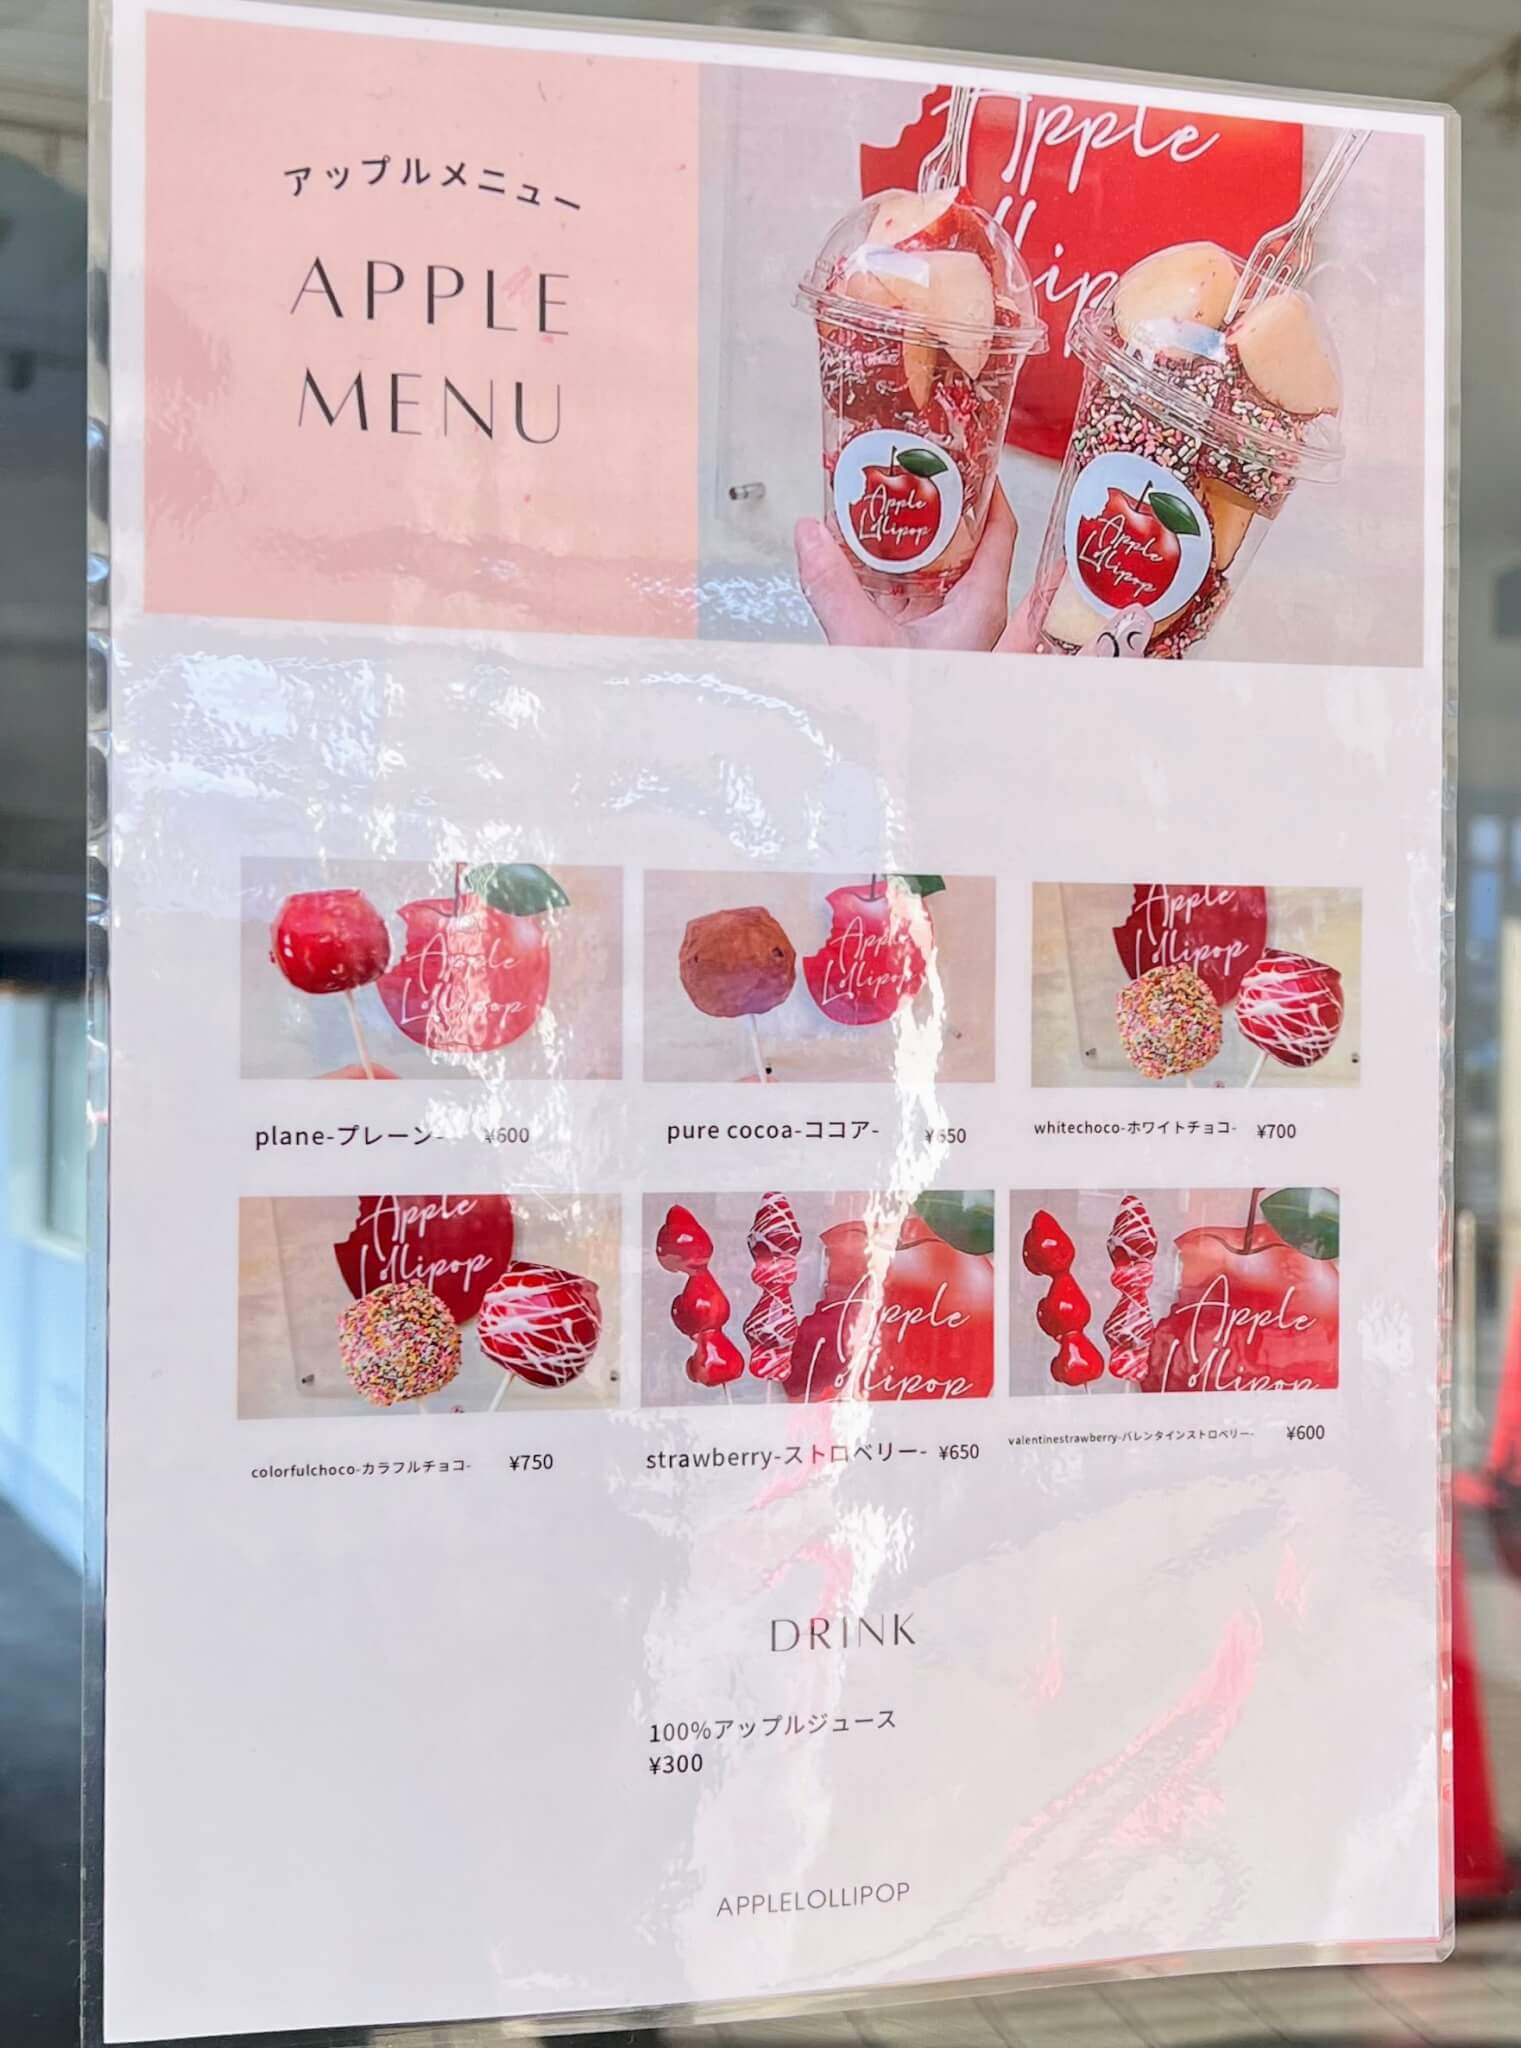 AppleLollipopの加古川ヤマトヤシキ期間限定店舗のメニュー